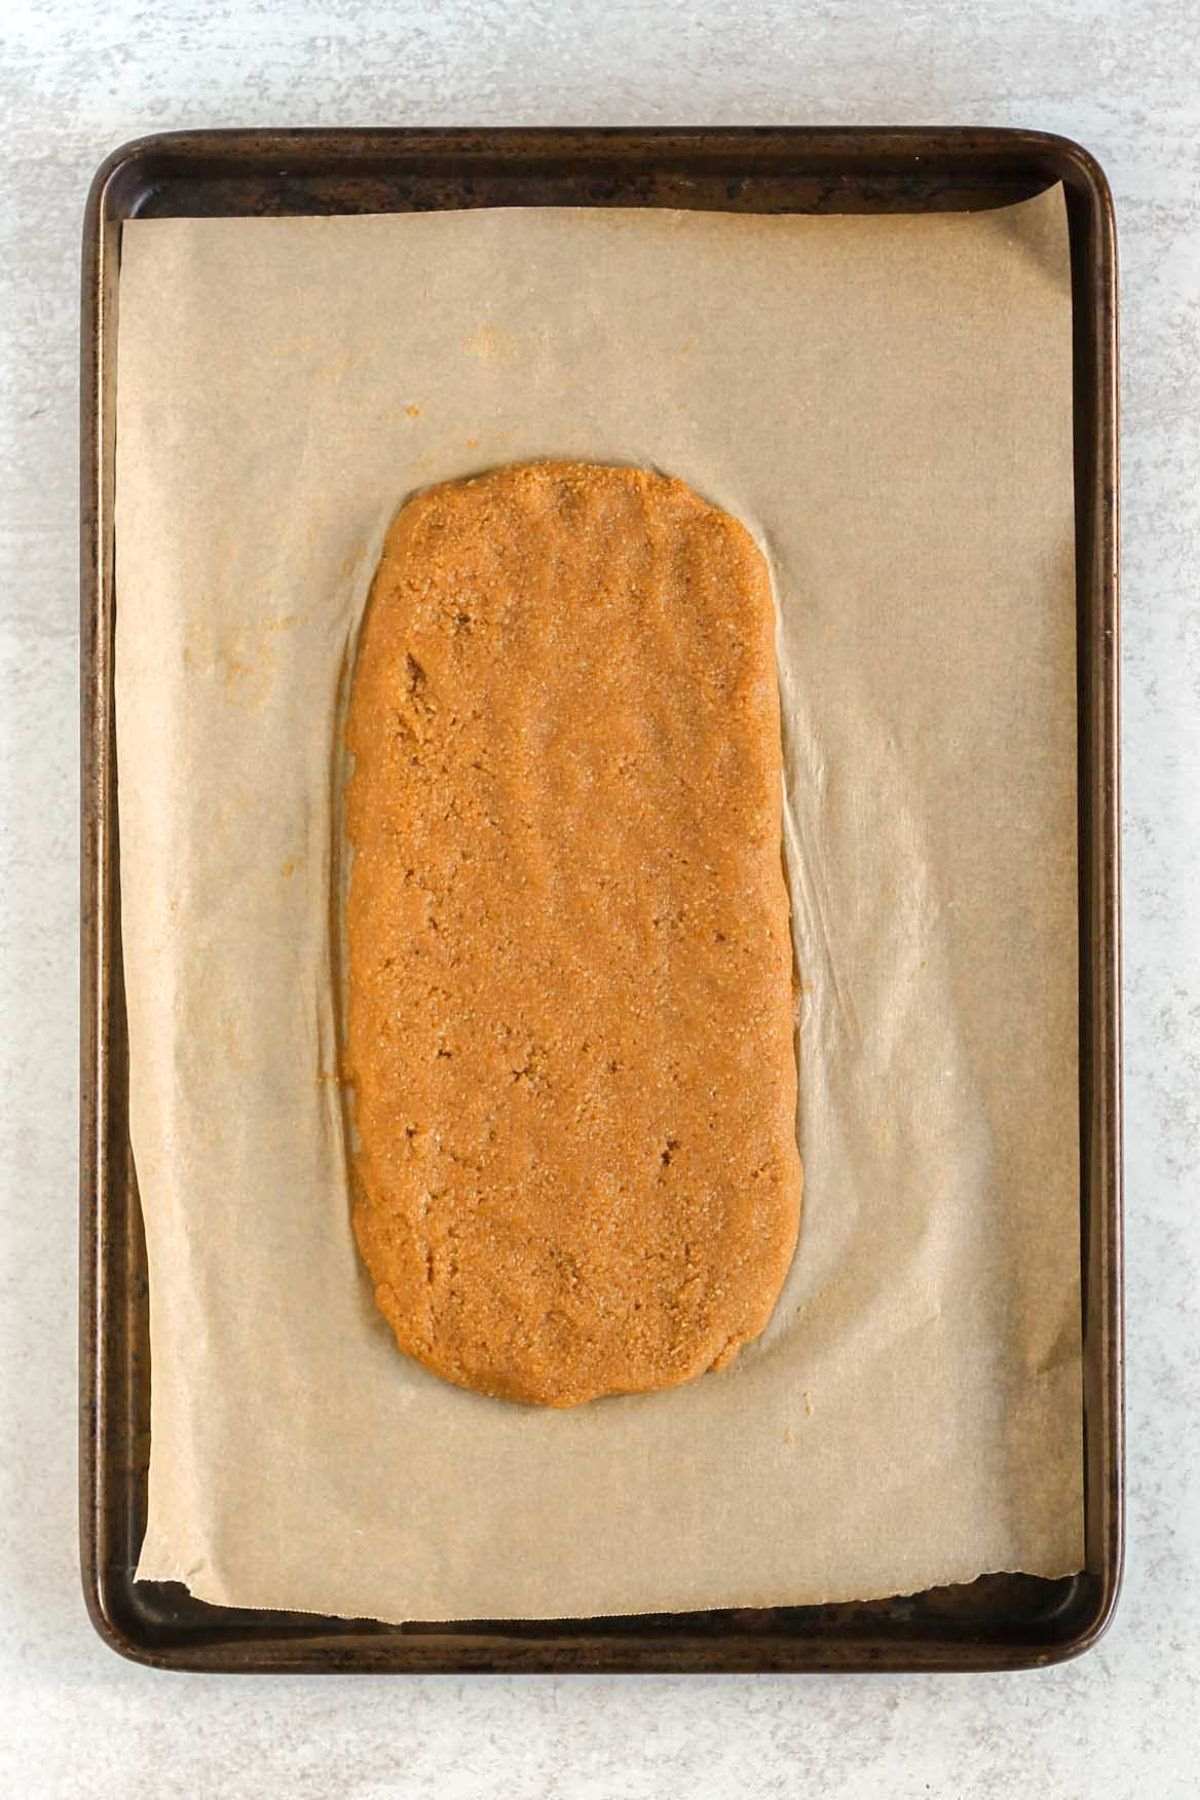 Almond flour biscotti dough shape into a log on a parchment paper lined baking sheet.